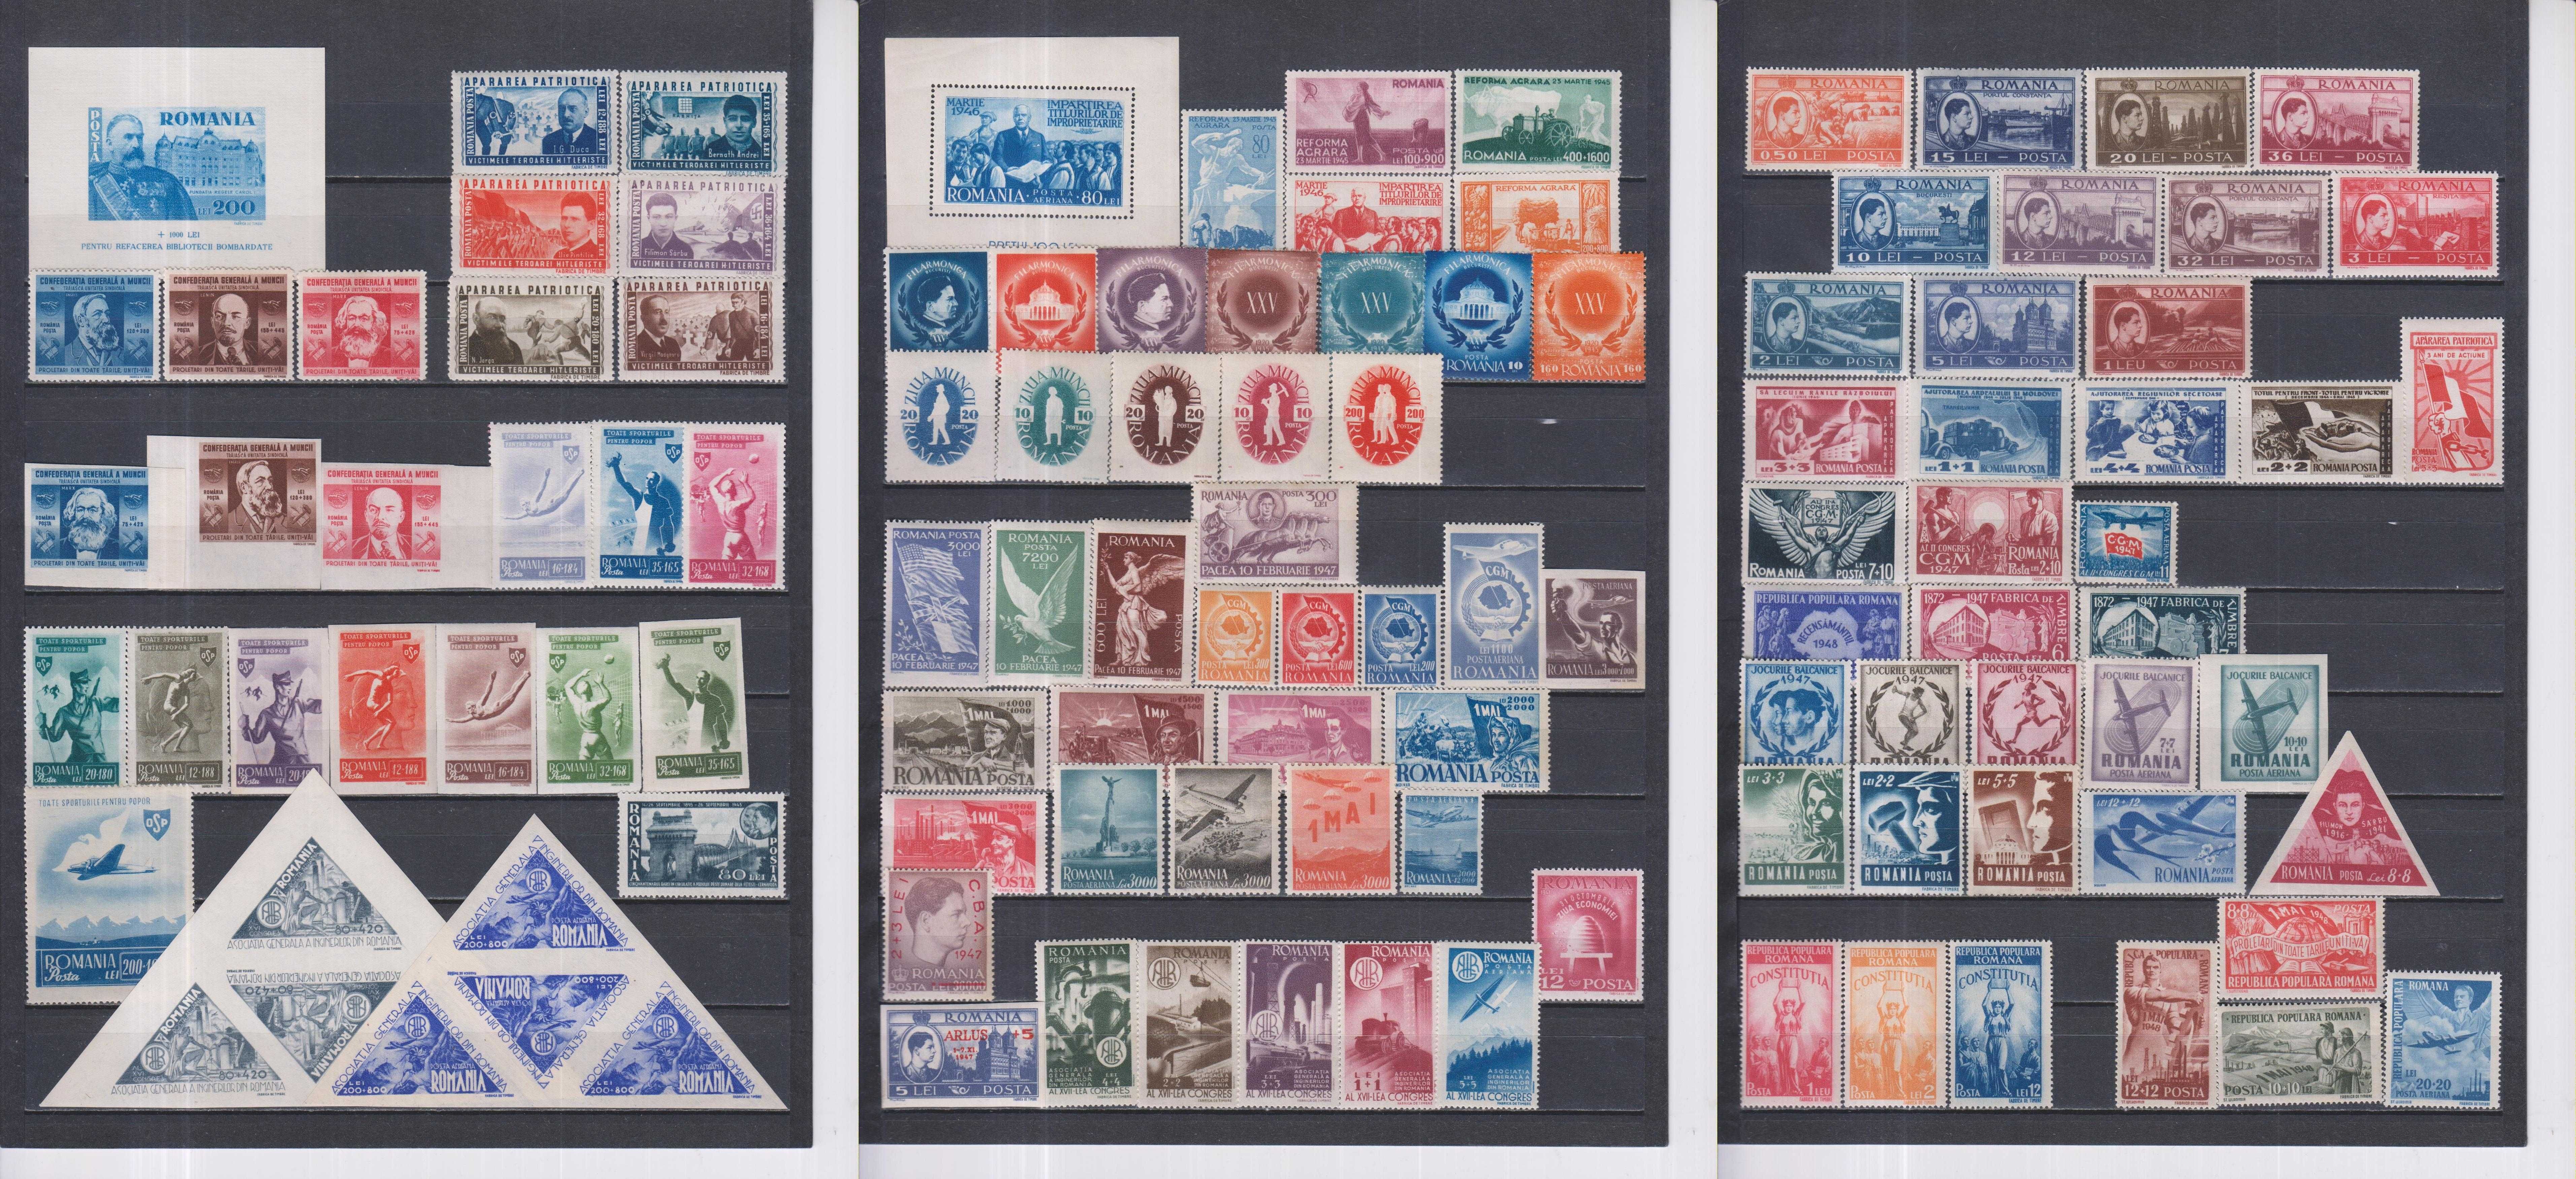 Lot de timbre romanesti - partea a doua